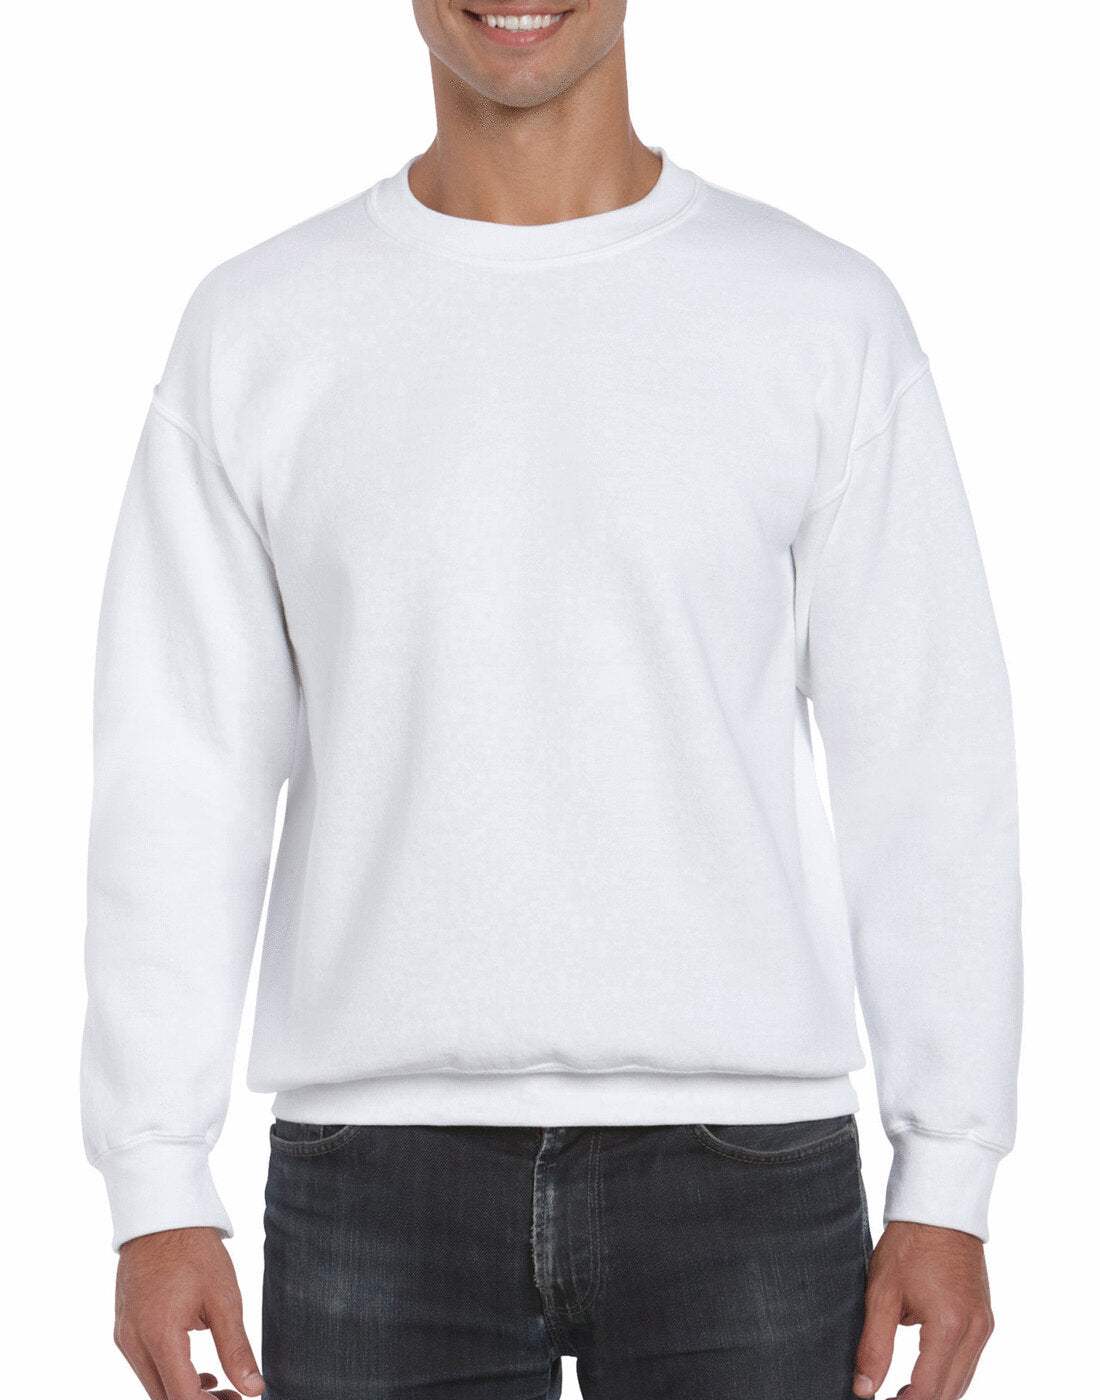 Gildan Dryblend Adult Crew Neck Sweatshirt - White